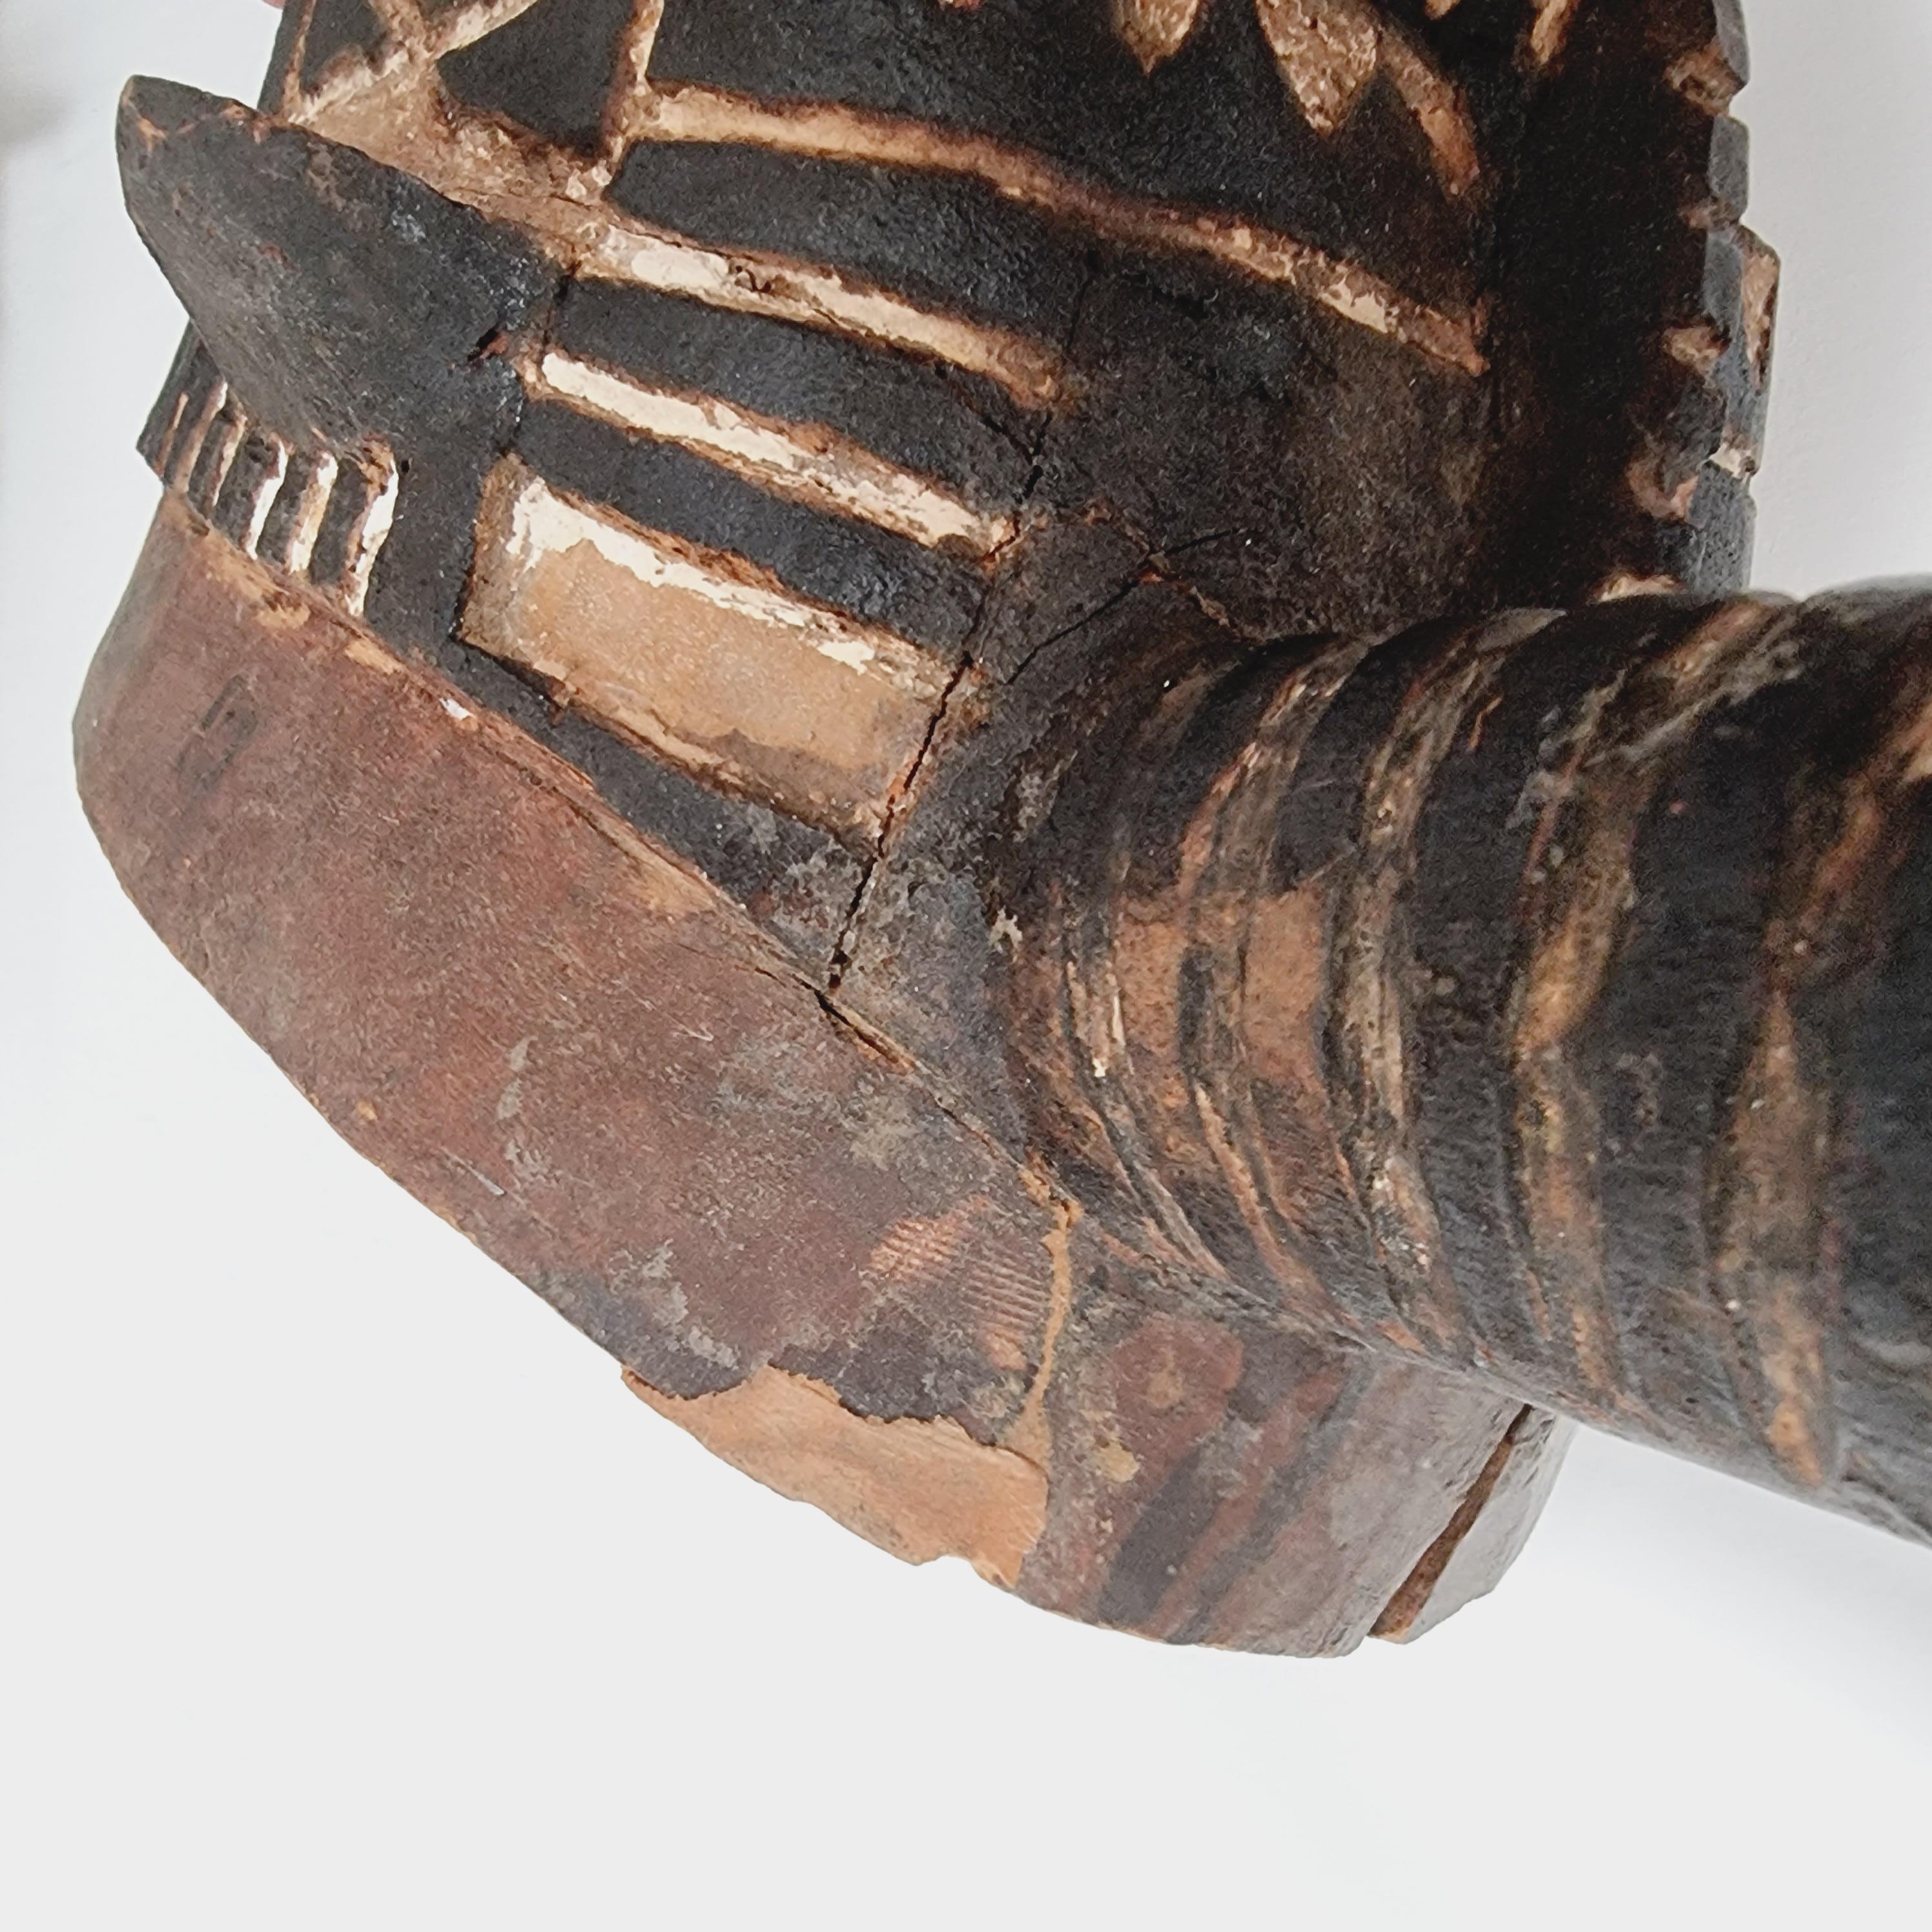 Bobo Uele-Maske, Bwa, Nord- Burkina Faso, erste Hälfte der 1900er Jahre (20. Jahrhundert) im Angebot